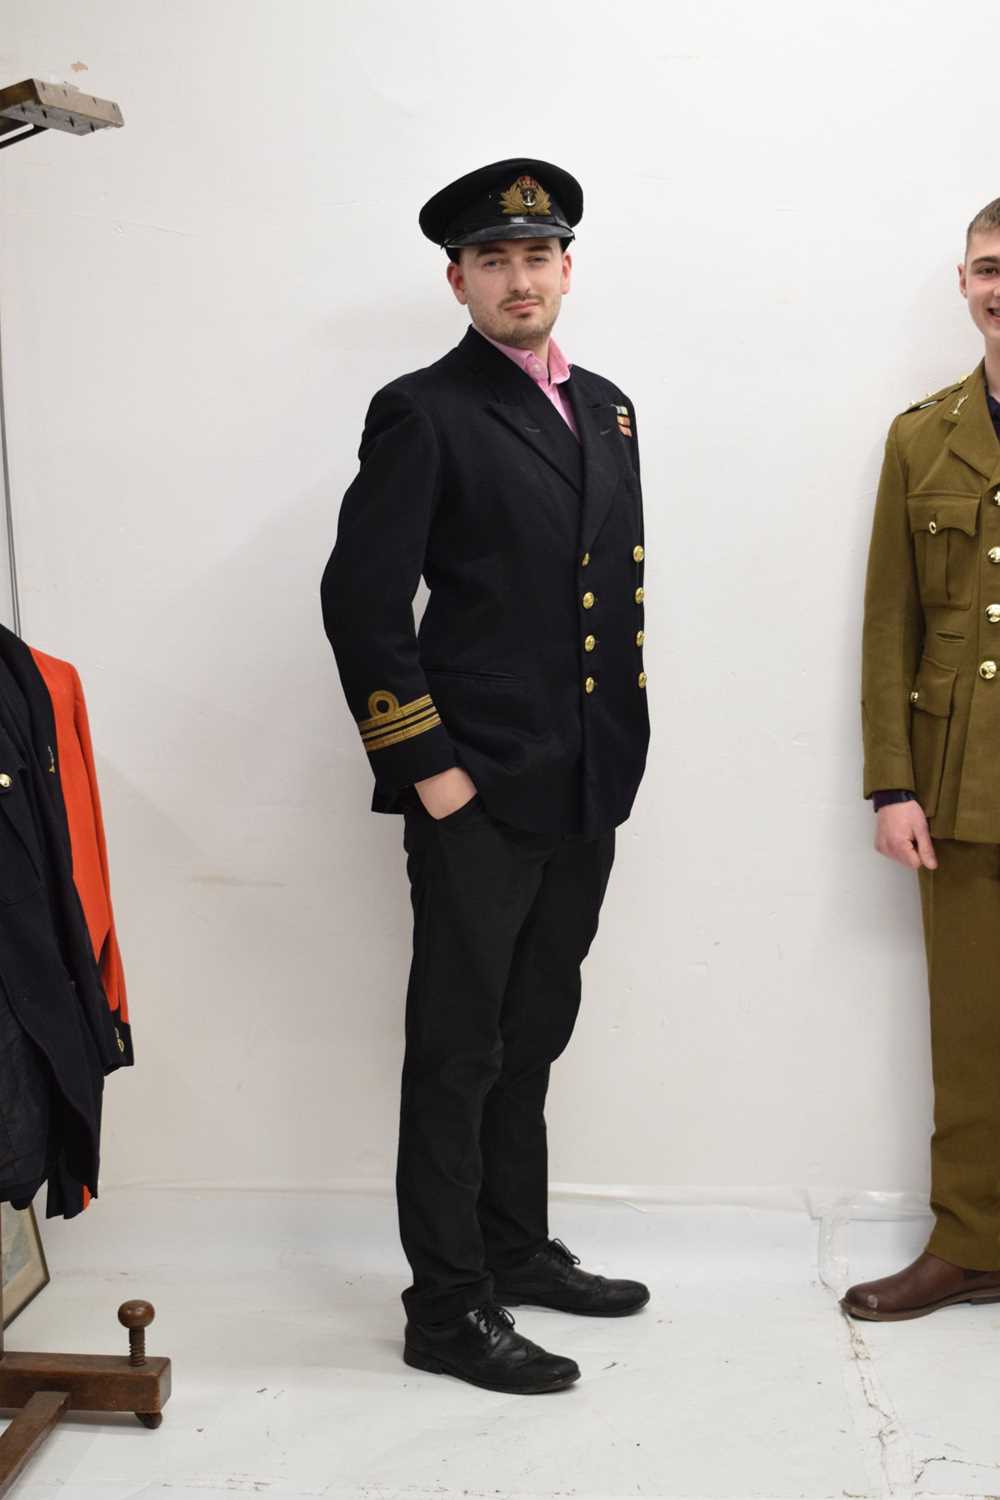 Royal Signals dress uniform circa 1950s - Image 14 of 27